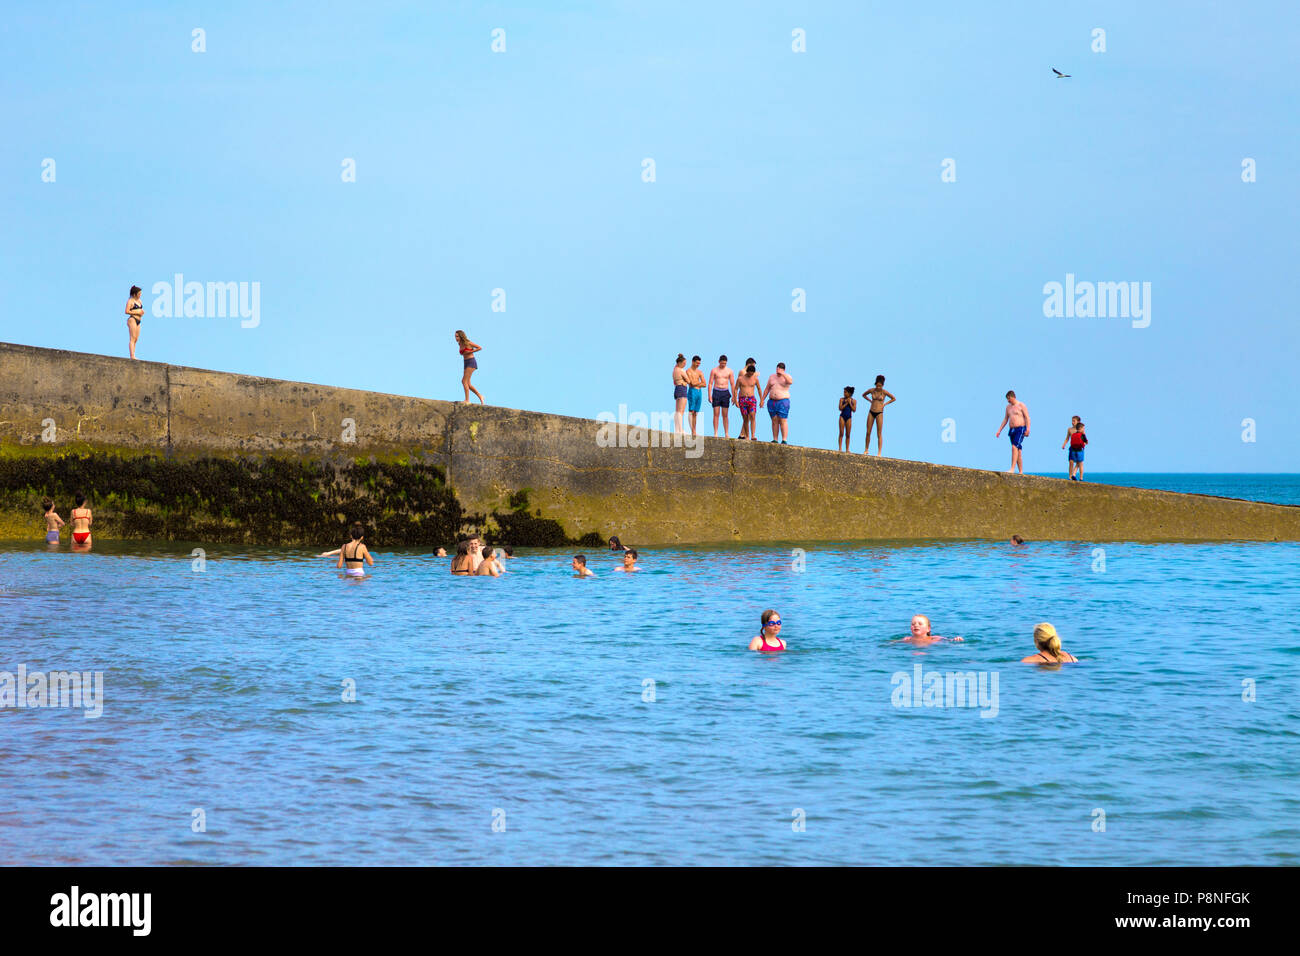 People bathing in the sea in Saltdean, UK Stock Photo